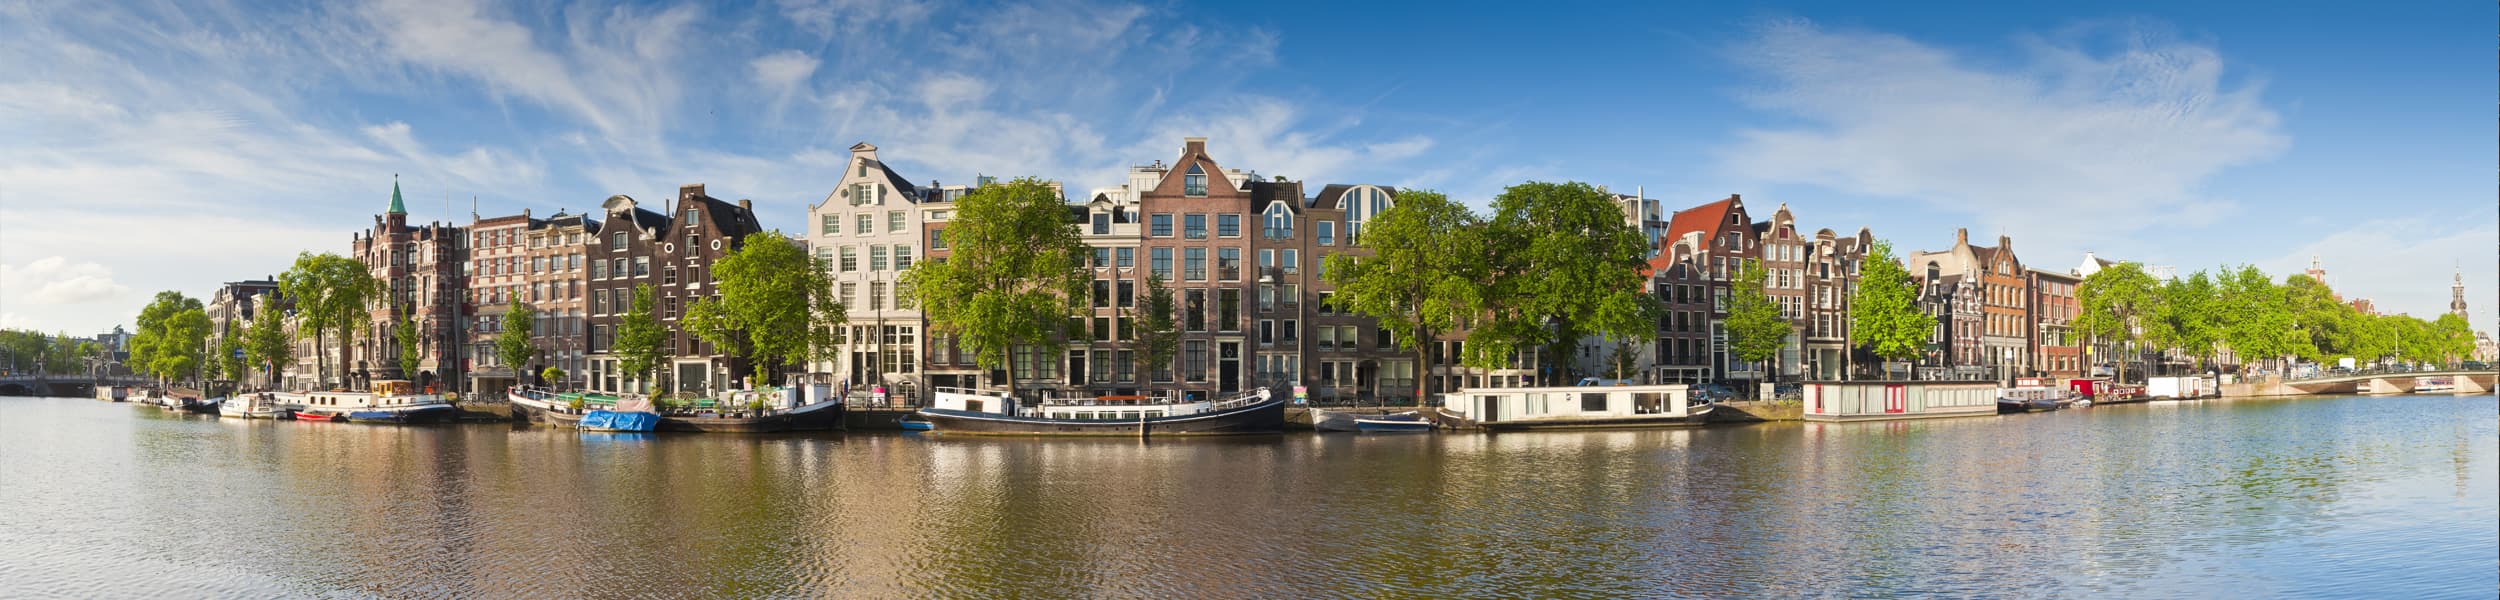 Java Software Engineer – Platforms & Financial Services Amsterdam, the Netherlands